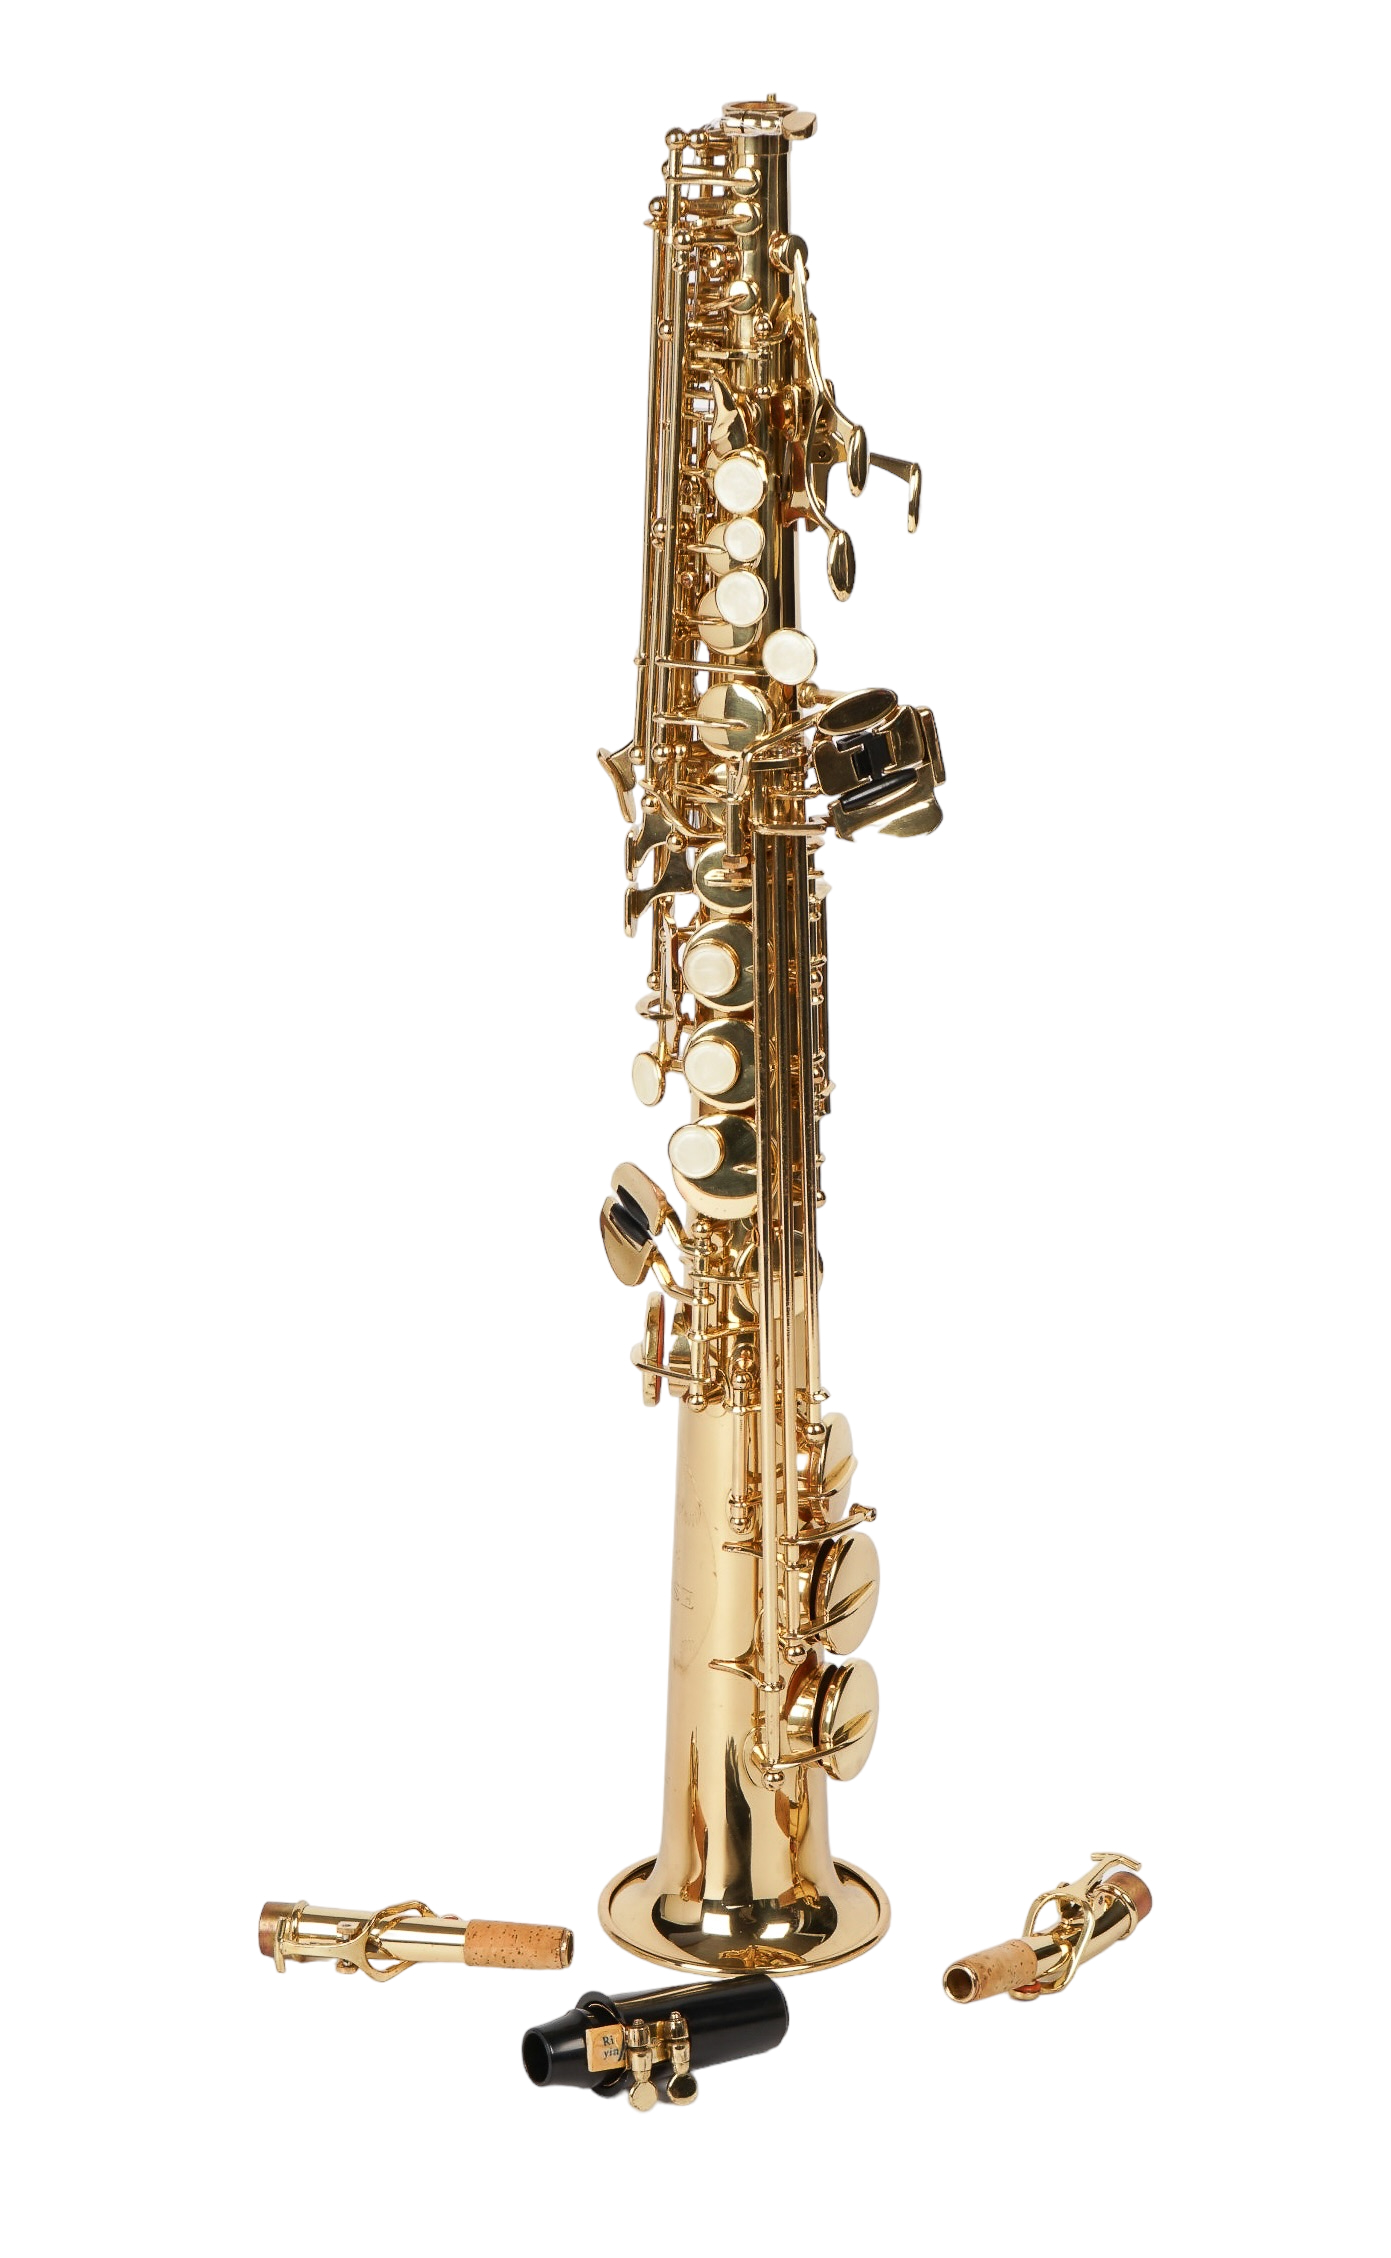 Sunrise soprano saxophone, with two